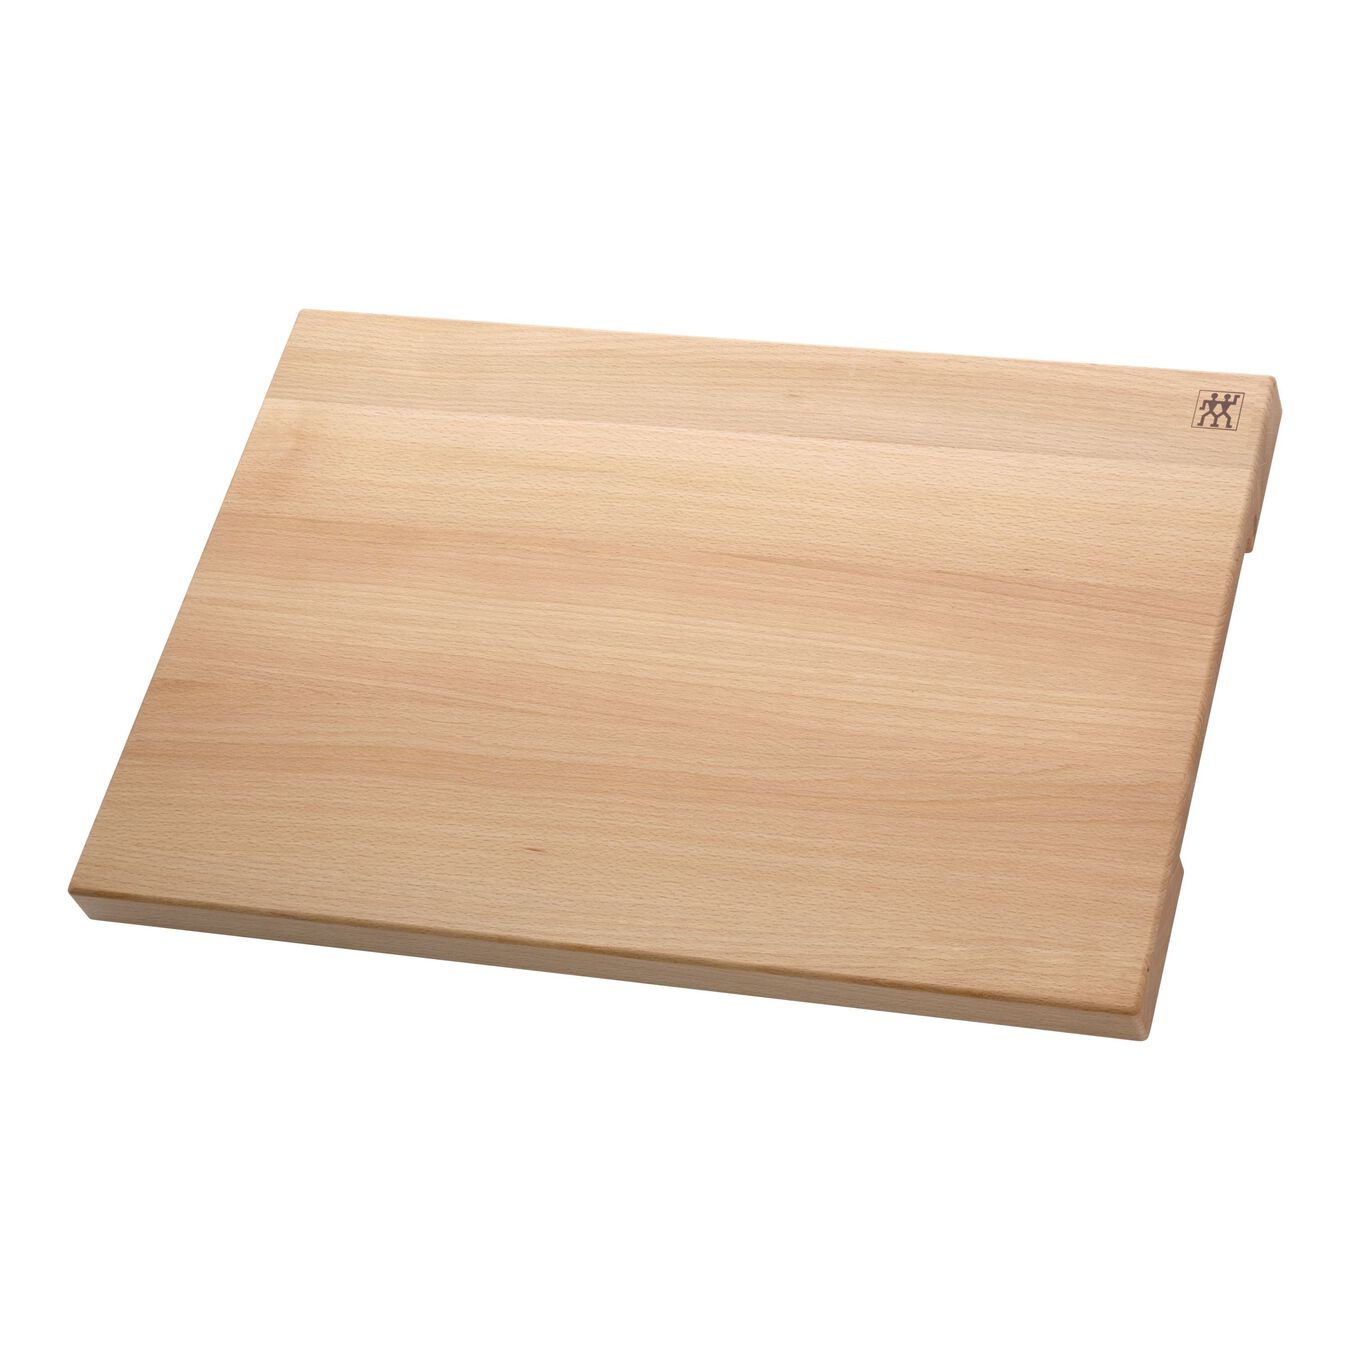 Cutting board 60 cm x 40 cm beech,,large 1